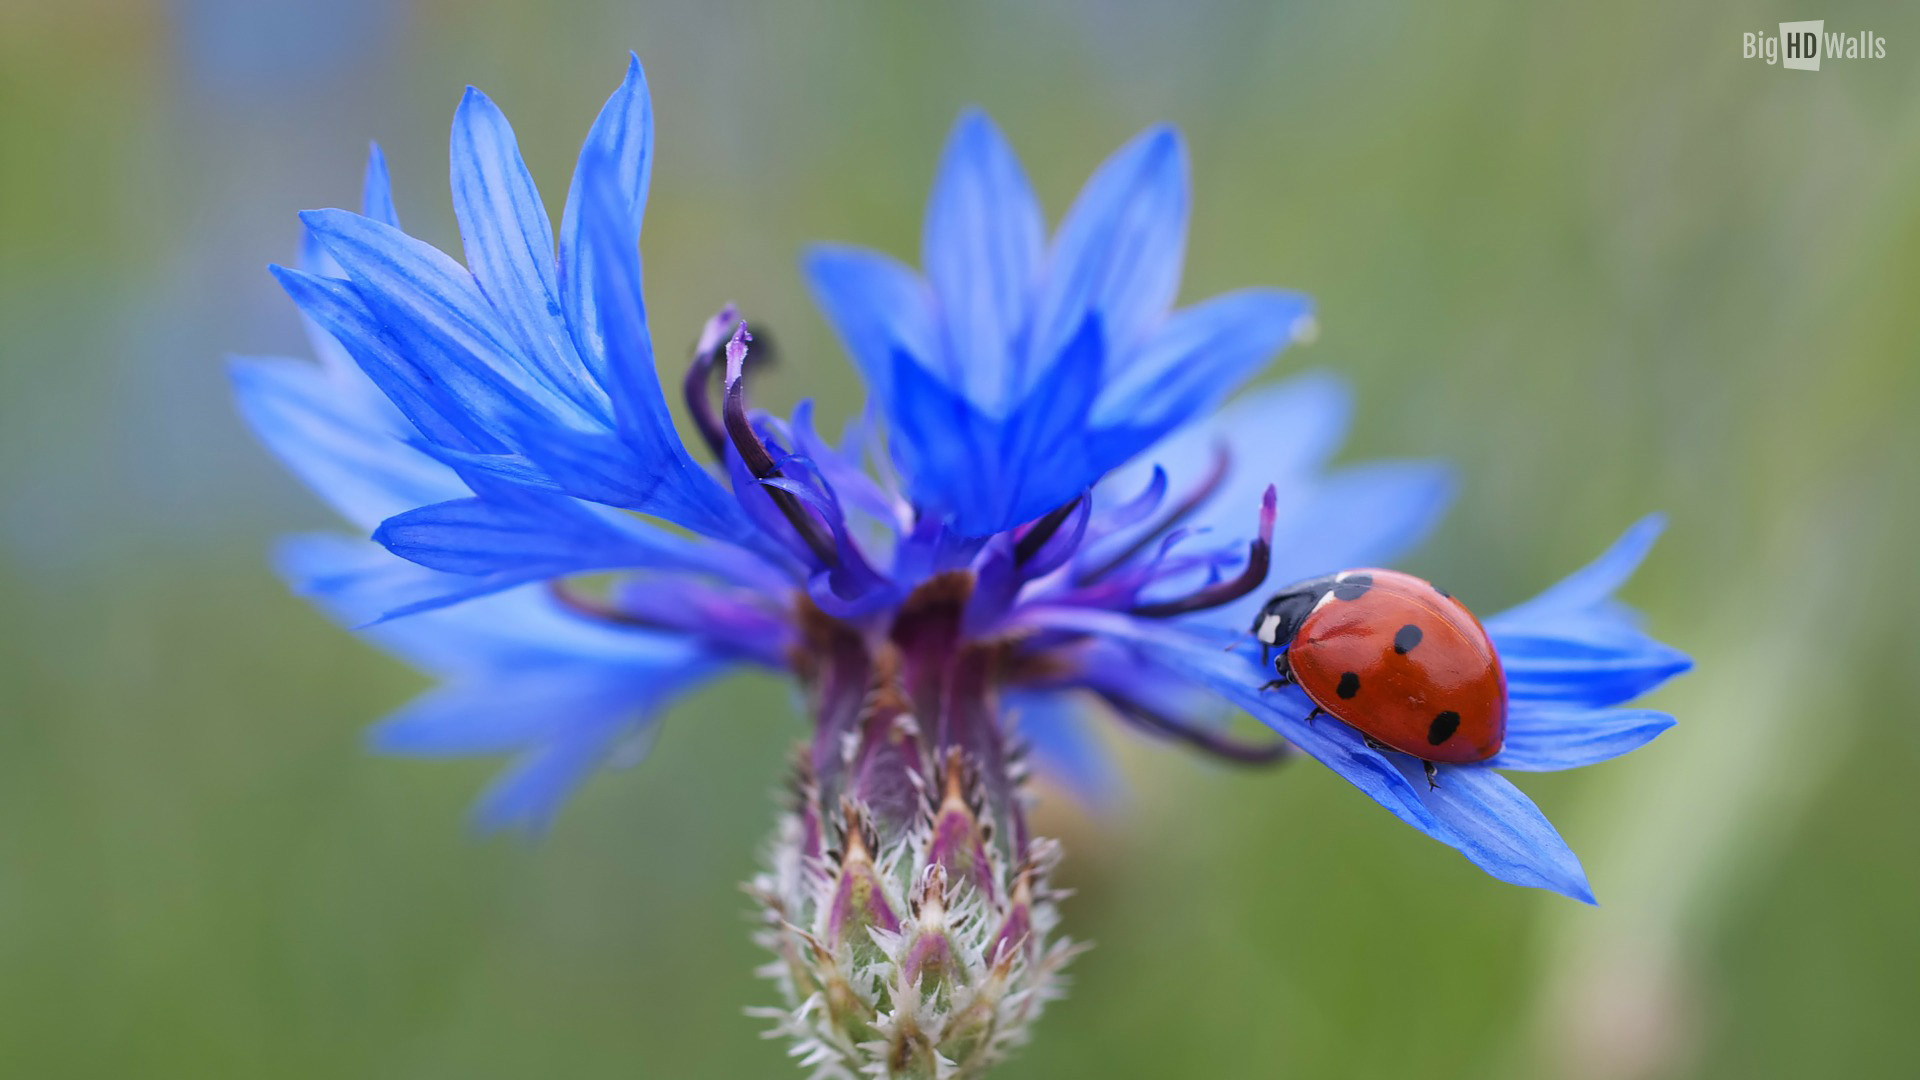 Ladybug on Blue flower HD Wallpaper | BigHDWalls